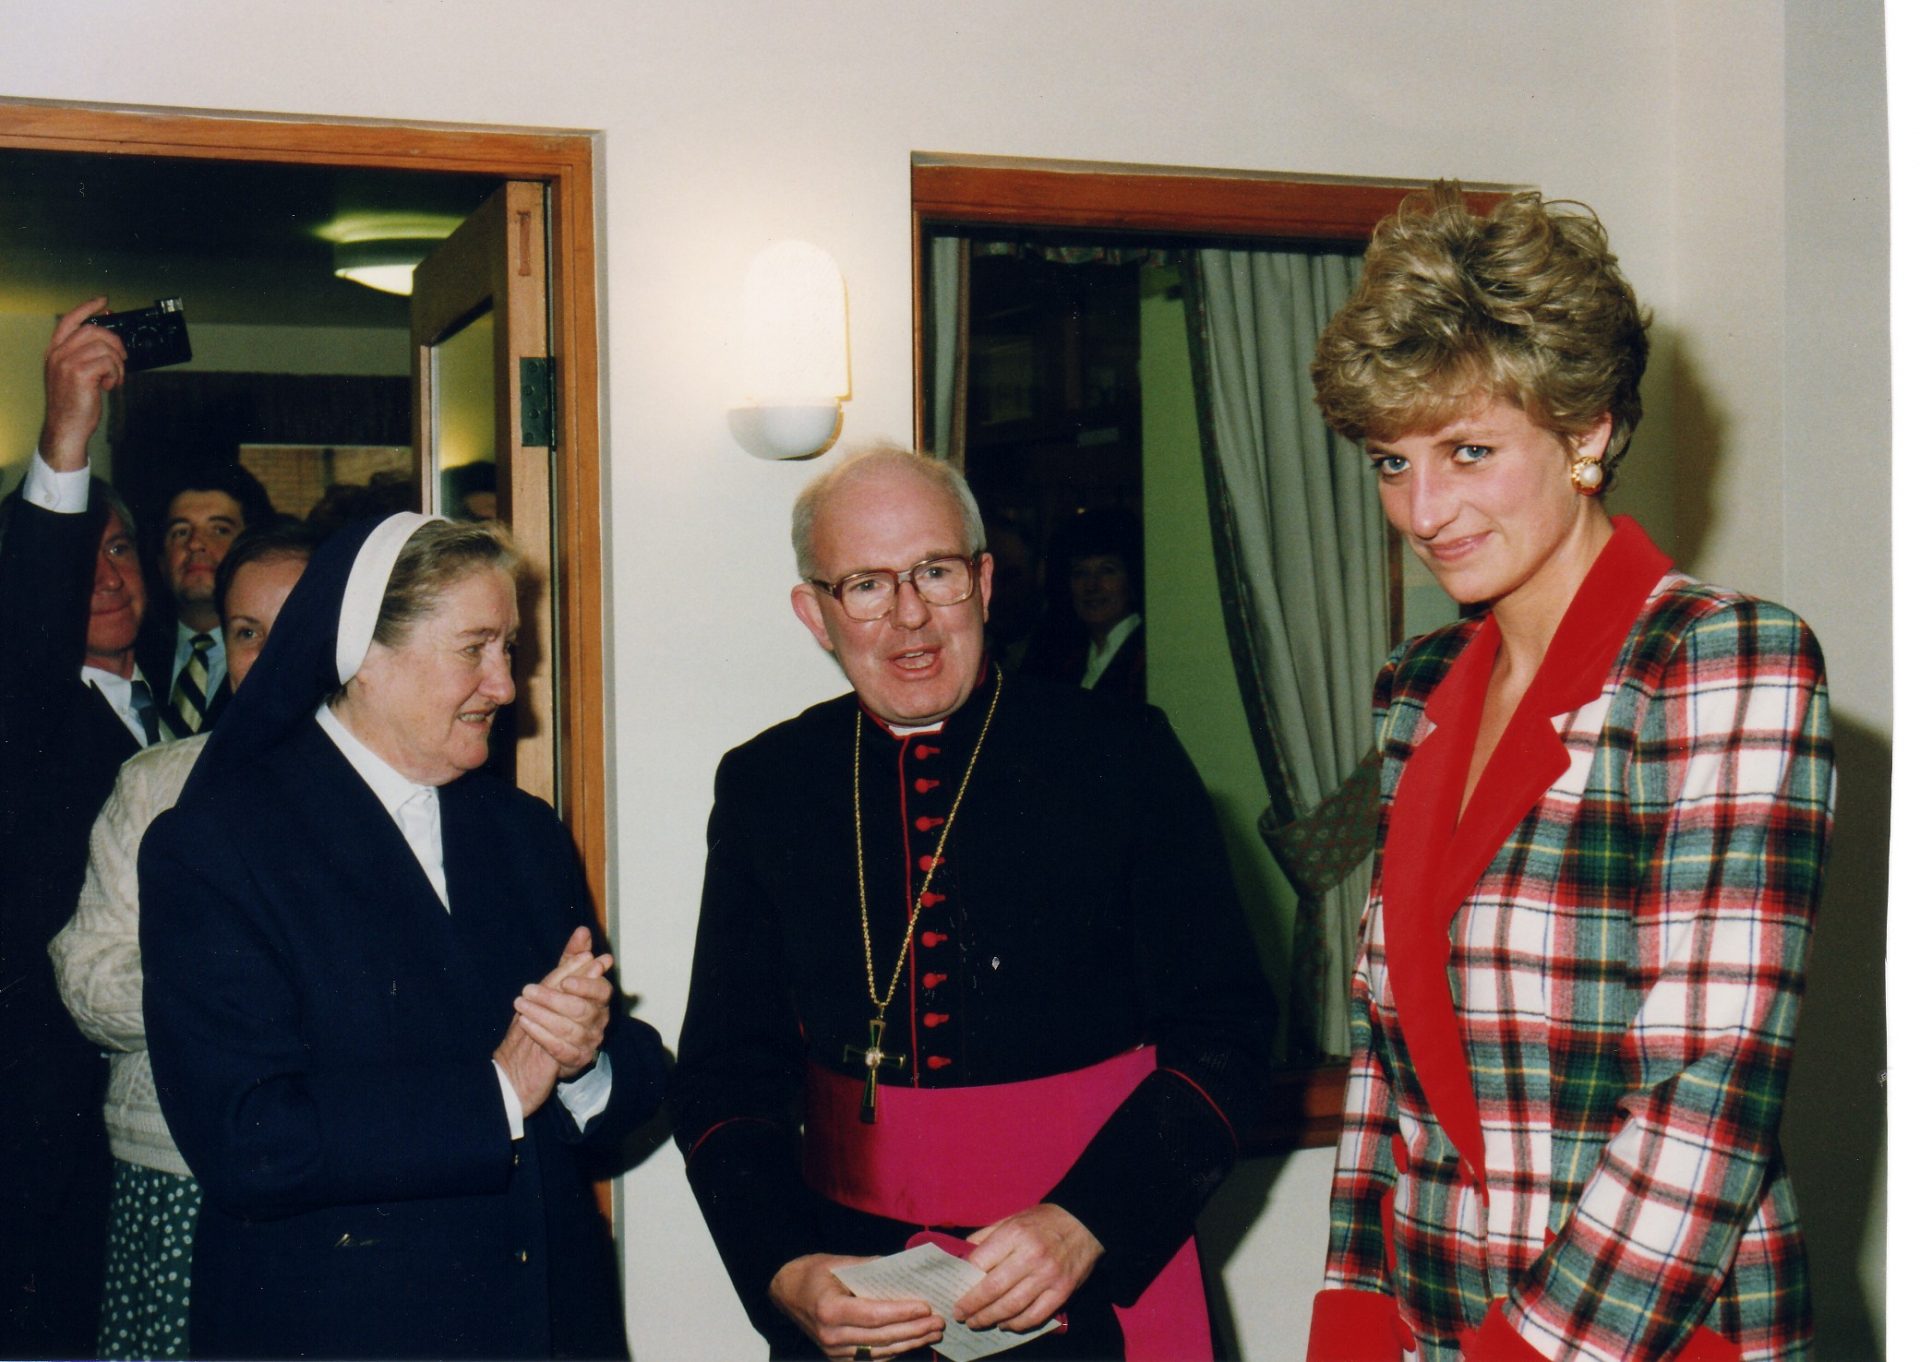 Sister Aloysius Archbishop Patrick Kelly and Princess Diana at the opening of Francis House in 1991